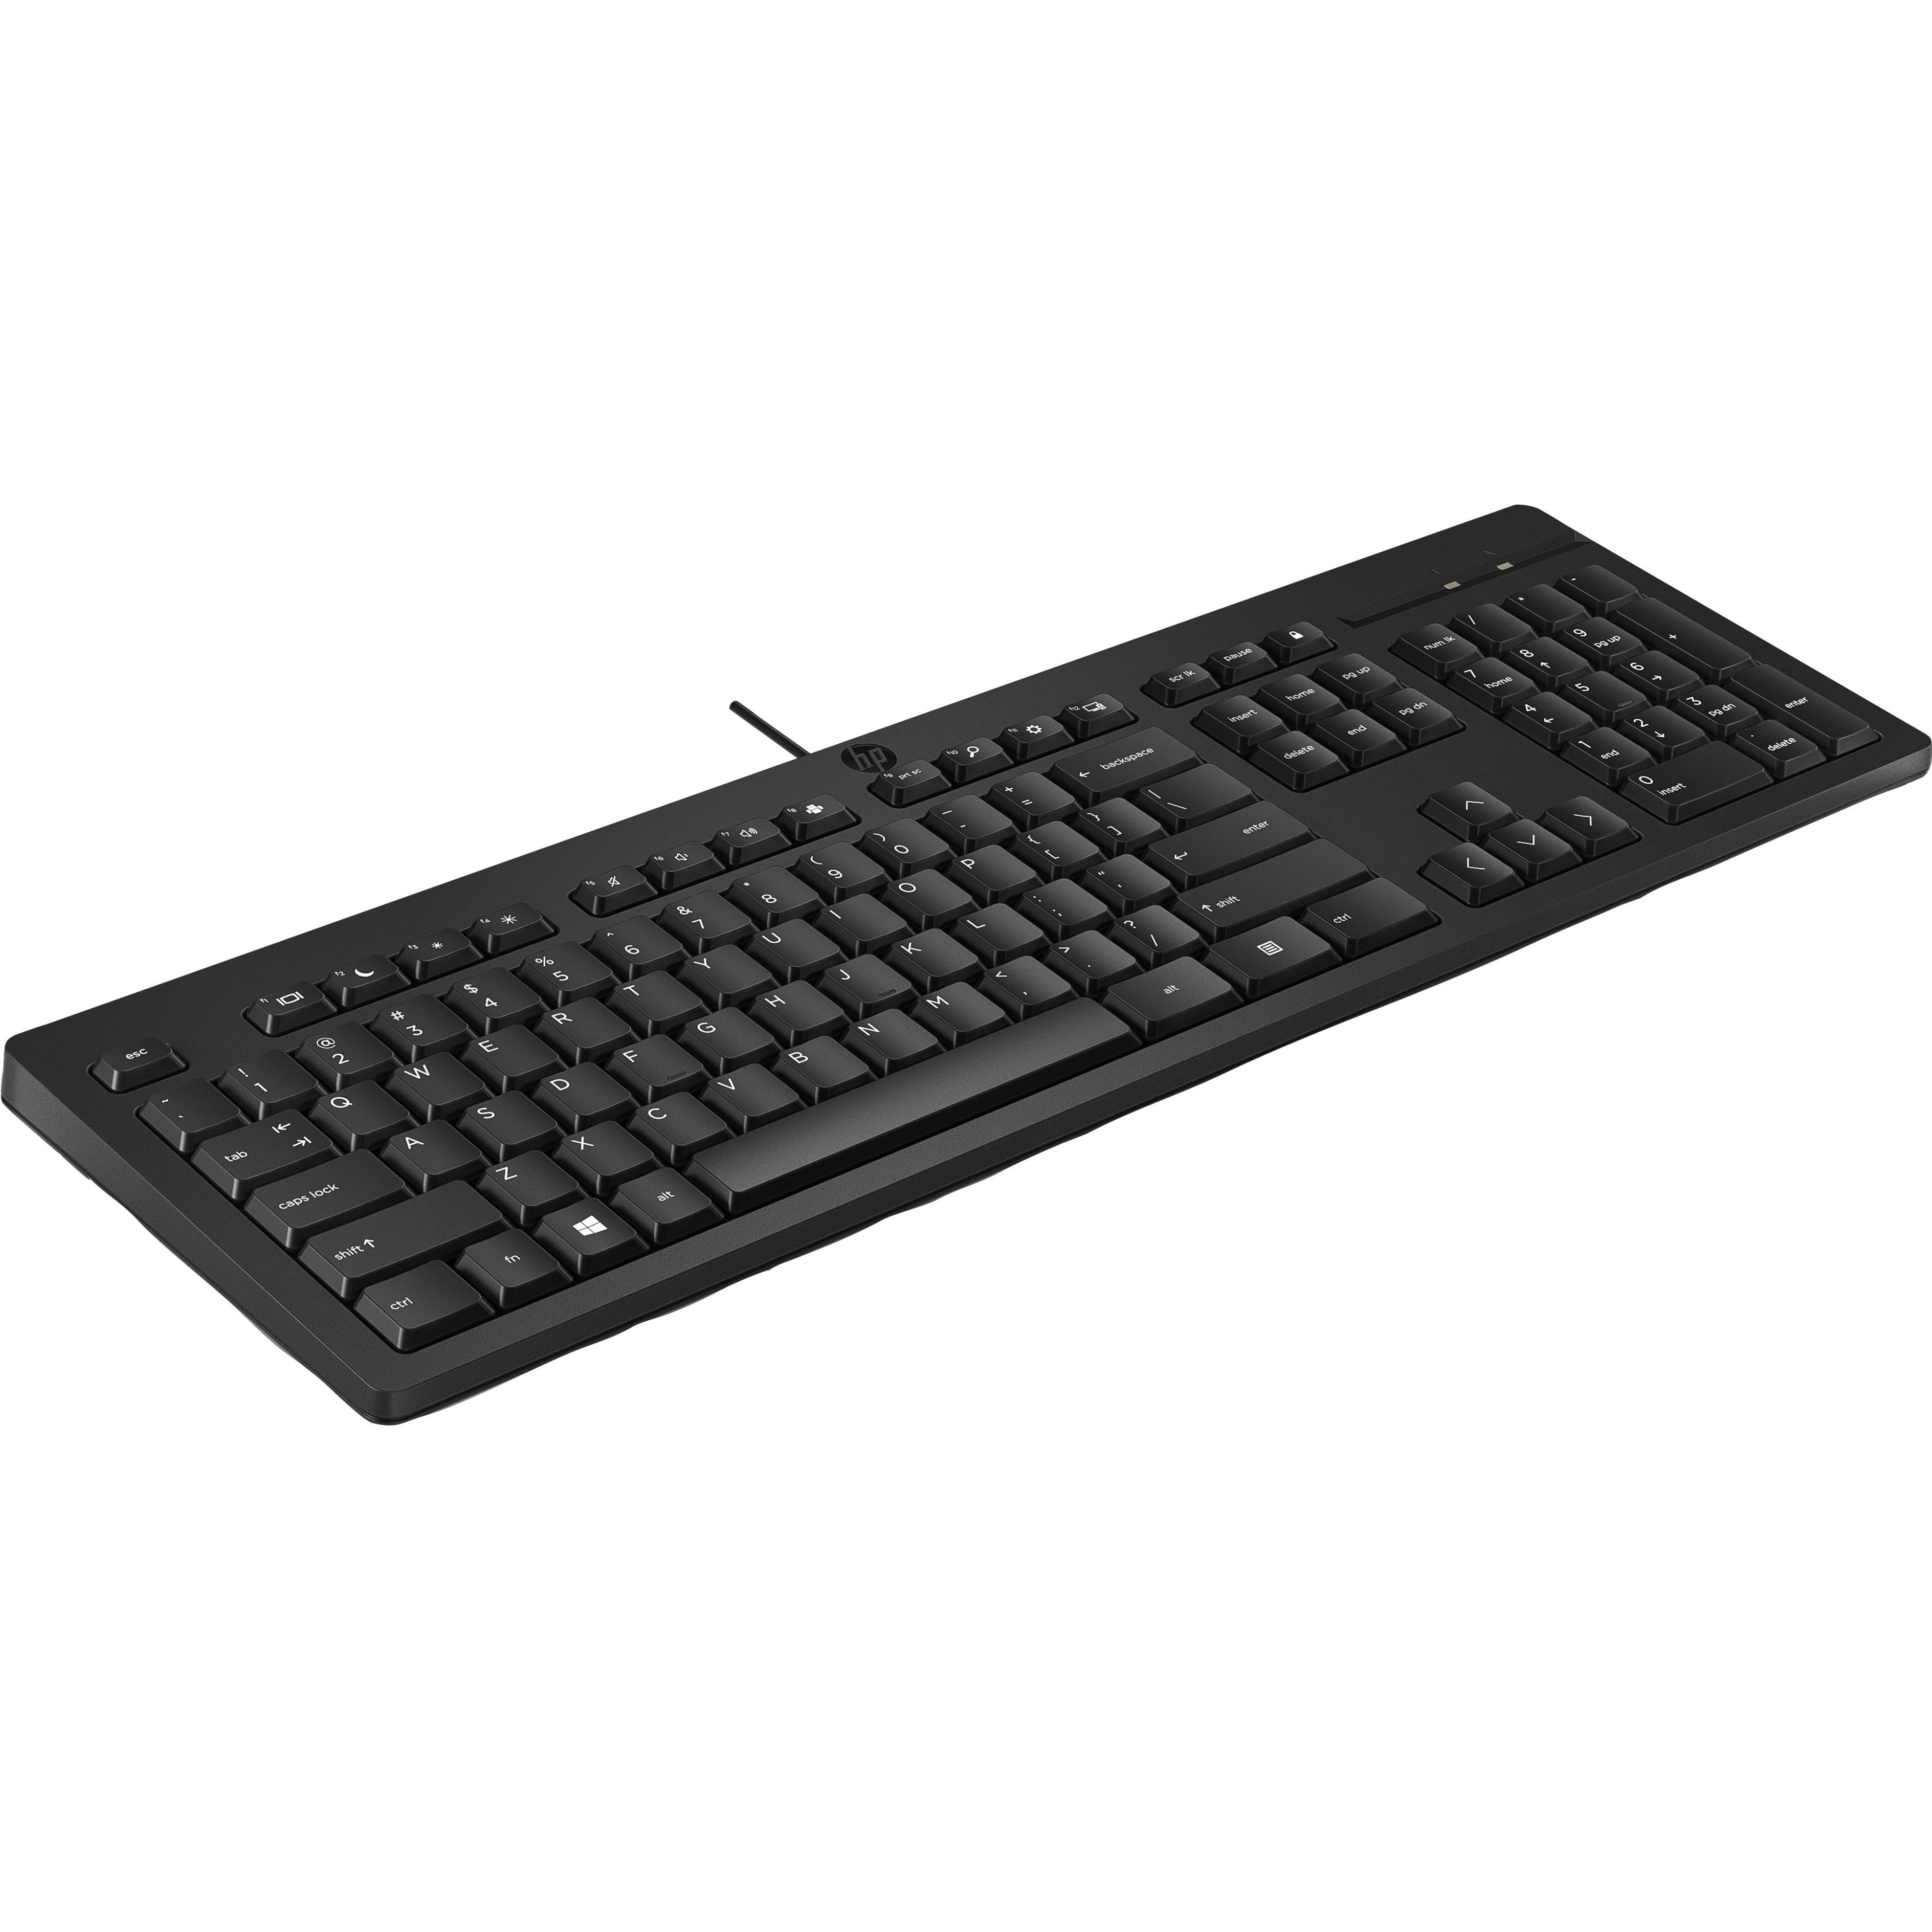 HP 125 Keyboard, Plug and Play, LED Indicator, Adjustable Height, Full-size Keyboard